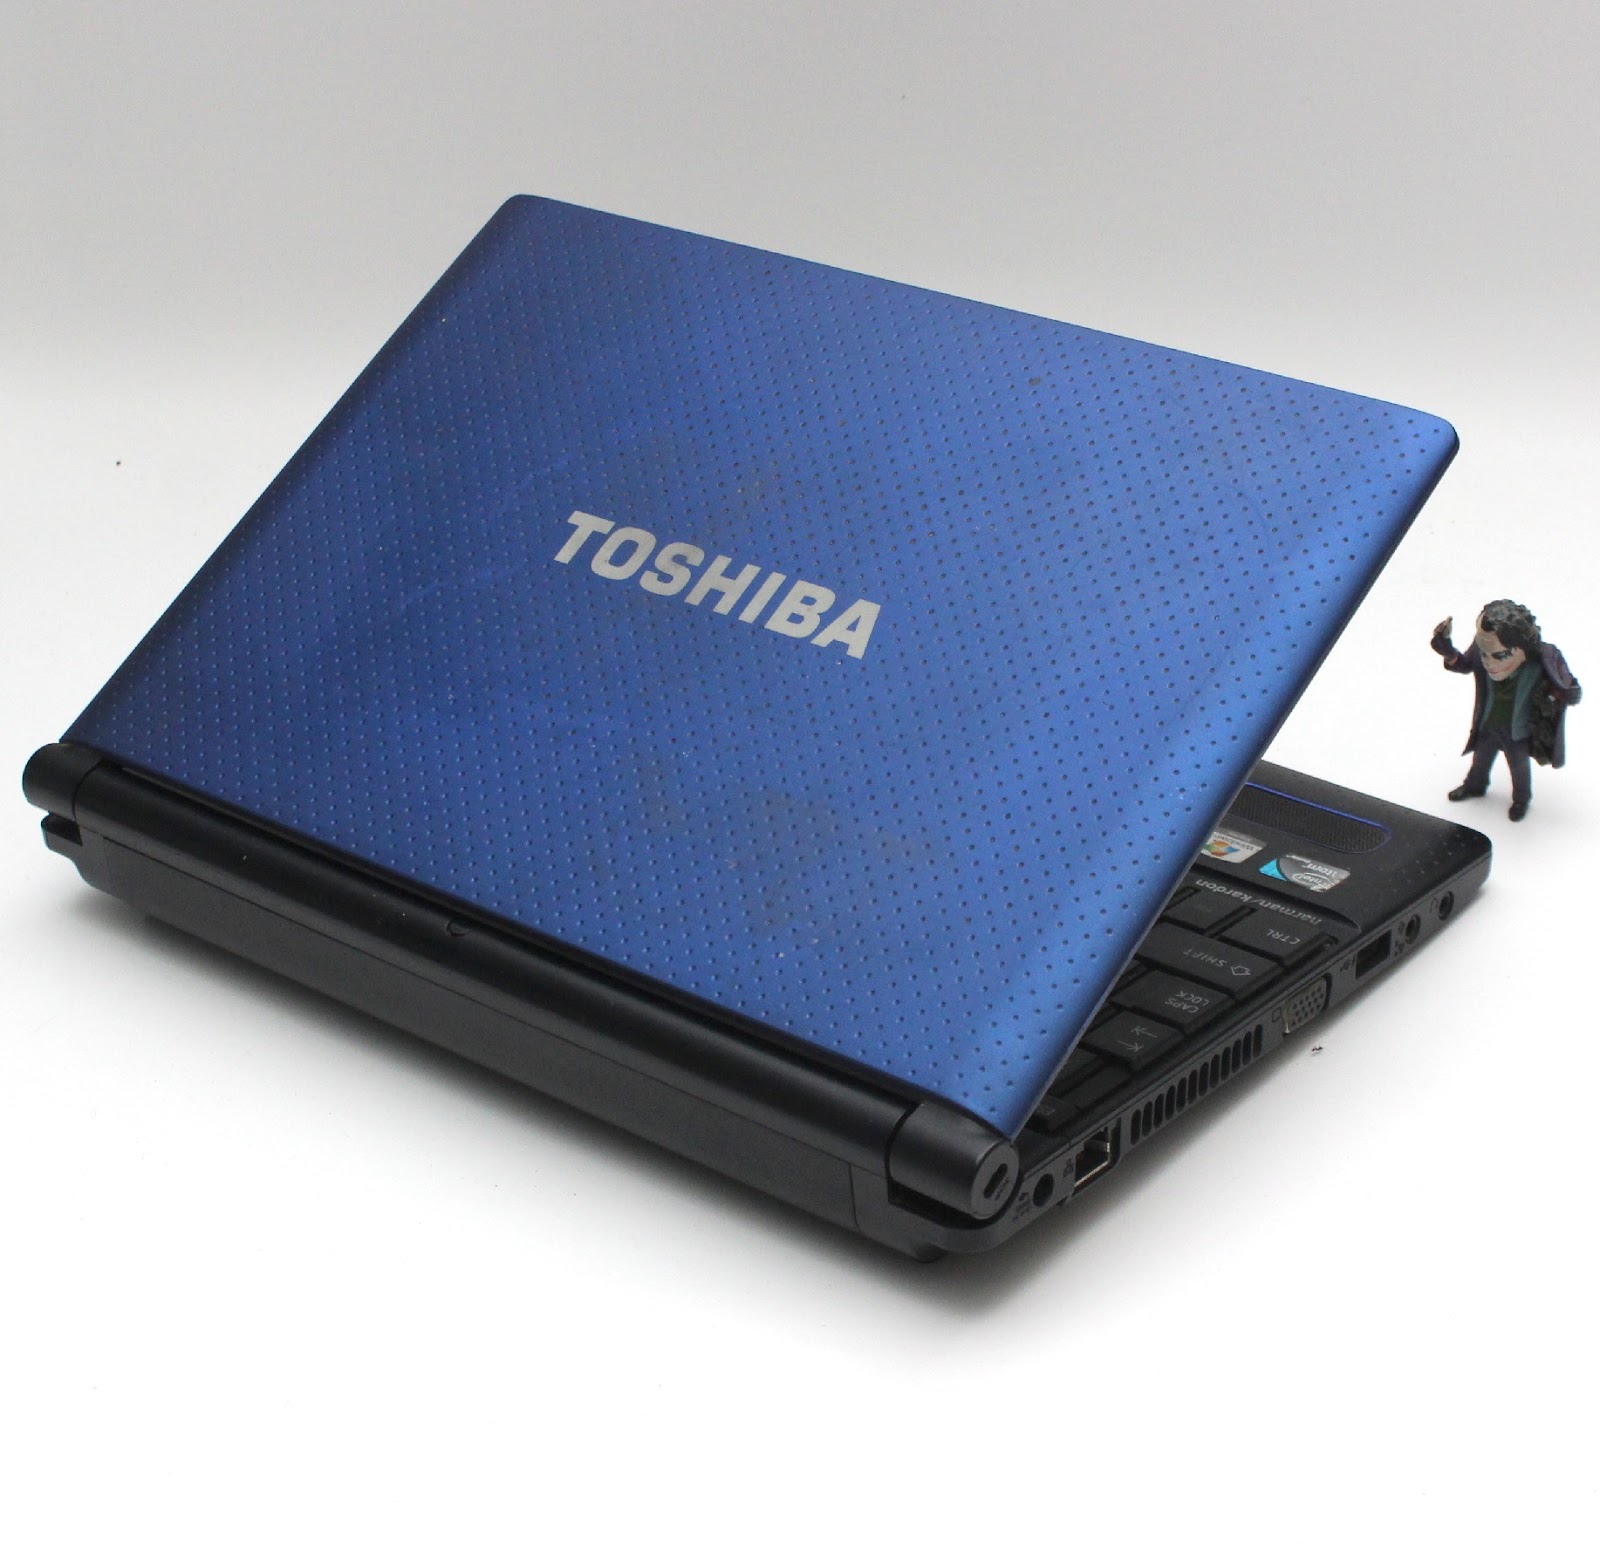 Graphics media accelerator 3600. Toshiba nb520-11t. Ноутбук Toshiba nb100-12n. Ноутбук ASUS Atom n2600/2gb/HDD/Intel GMA 3600/10.1''@1024*600 – 4000р. Toshiba nb520-11t разборка.